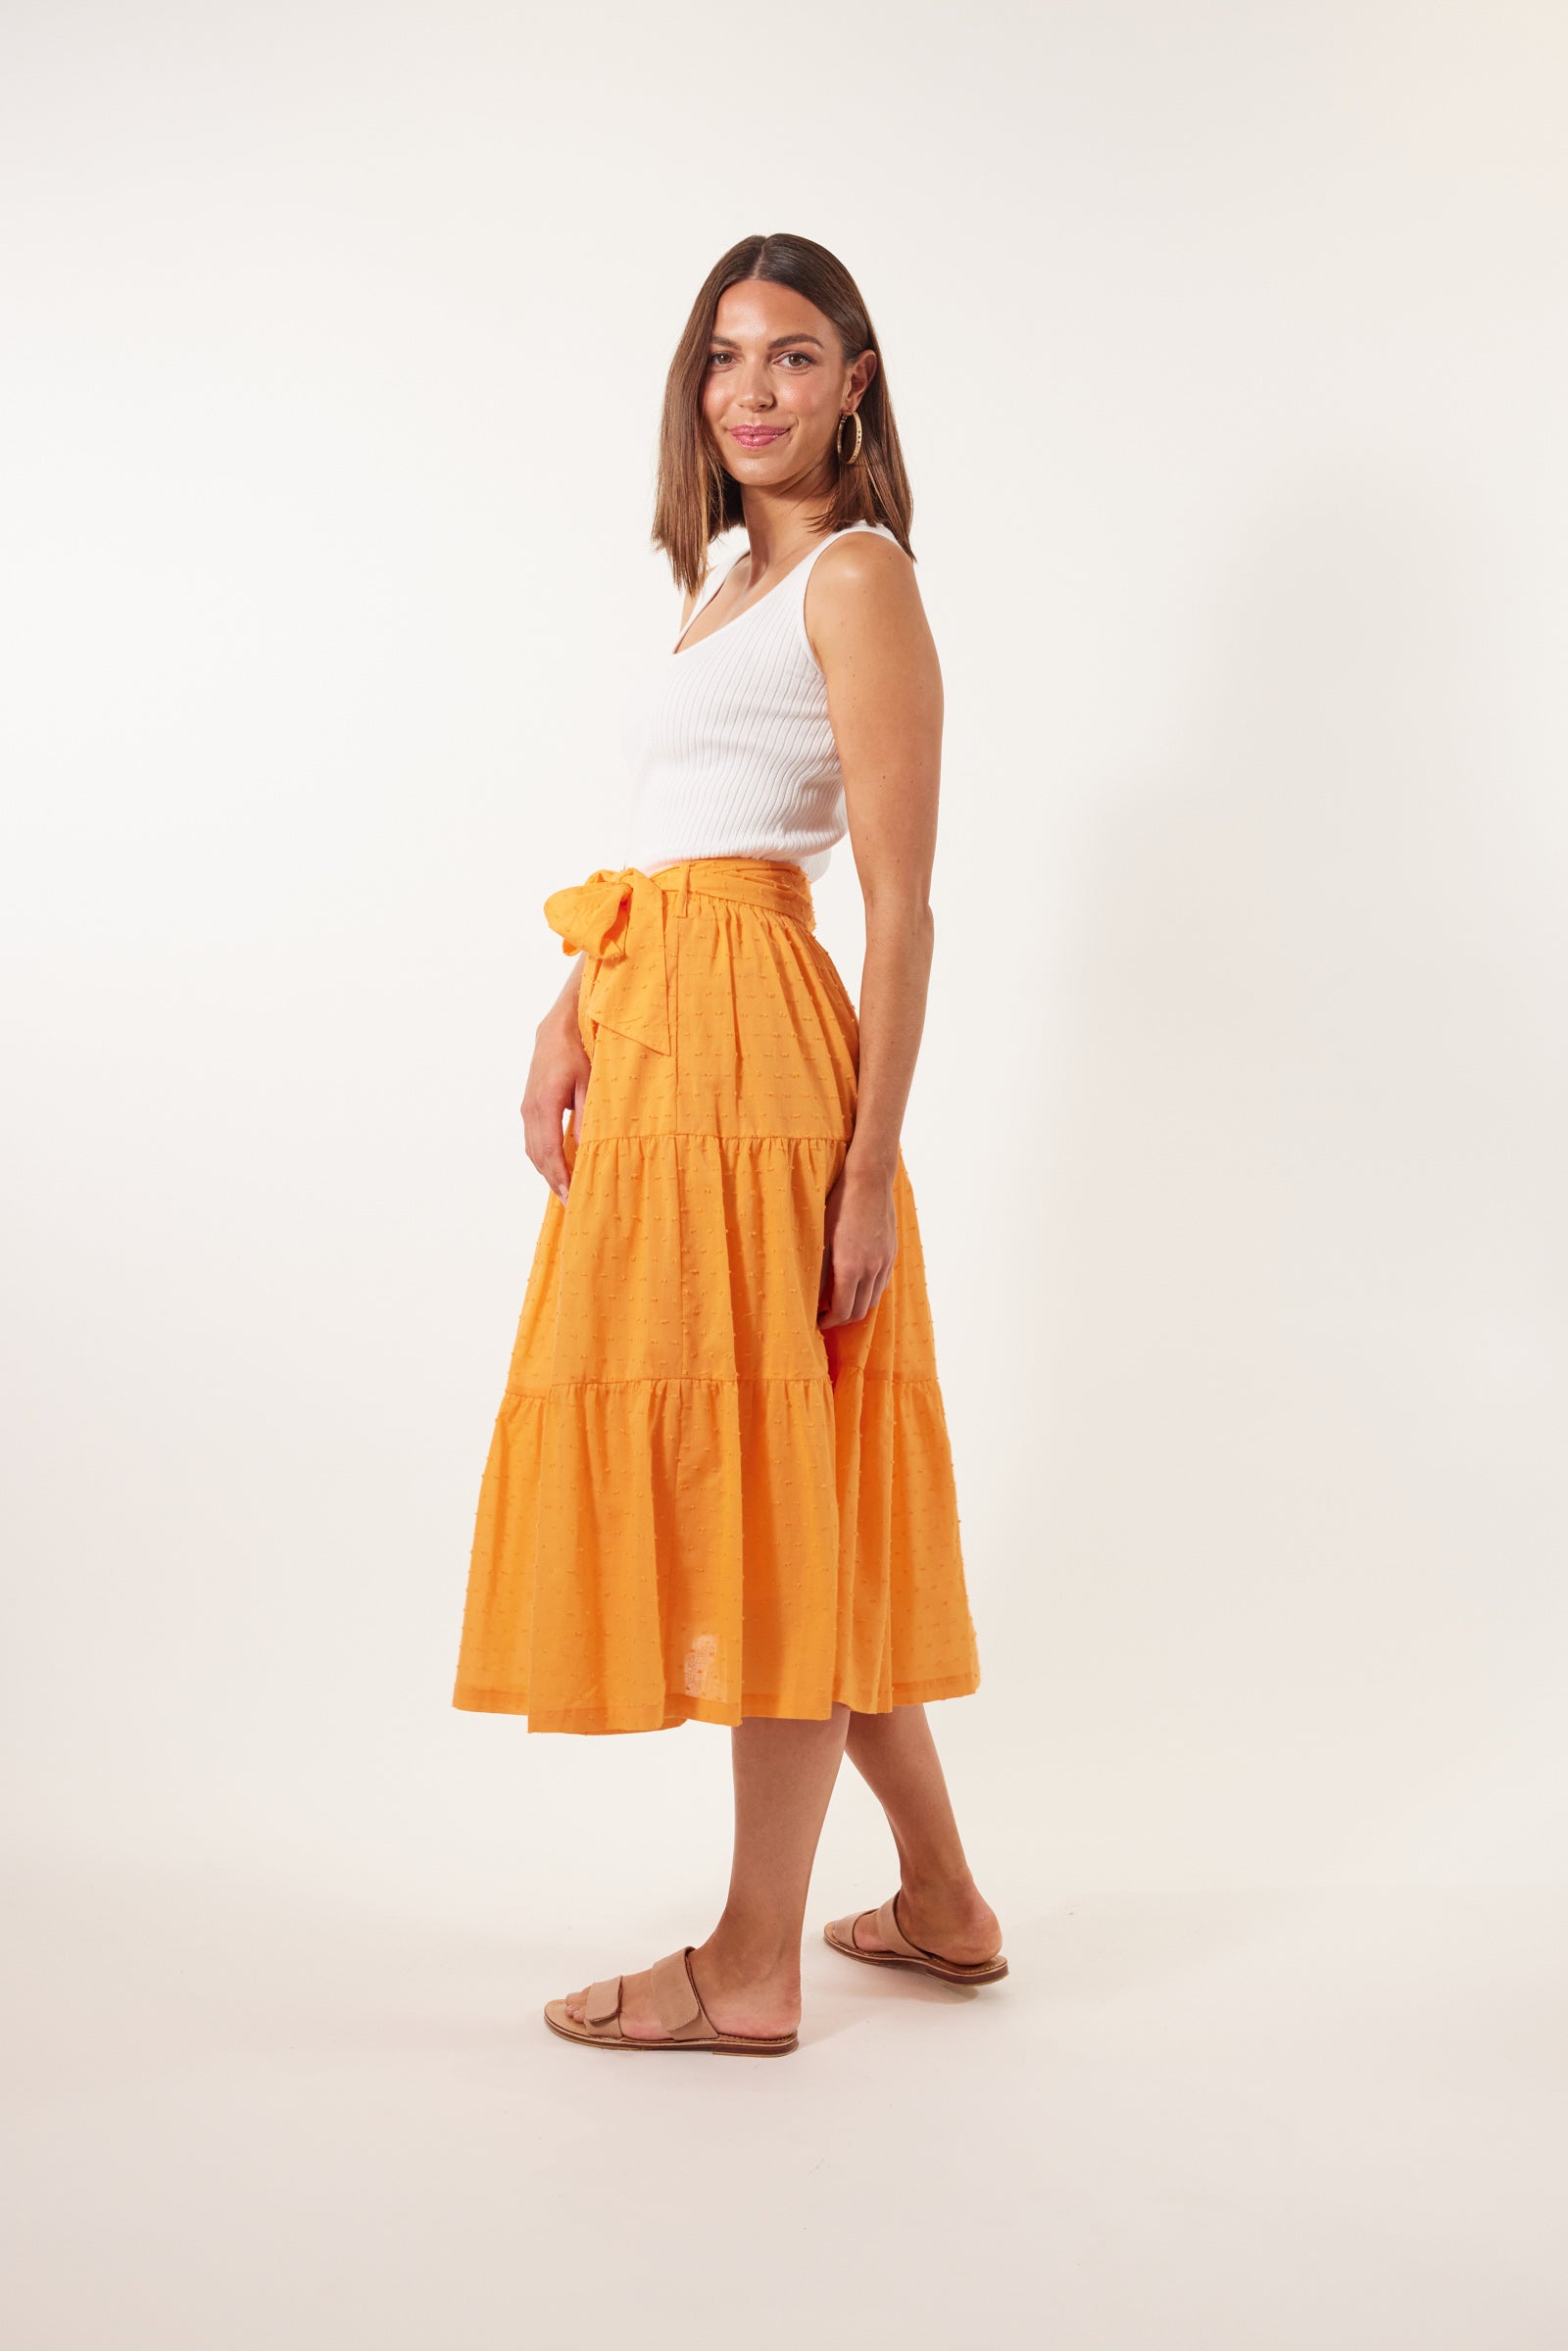 Soiree Skirt - Tangelo - Isle of Mine Clothing - Skirt Mid